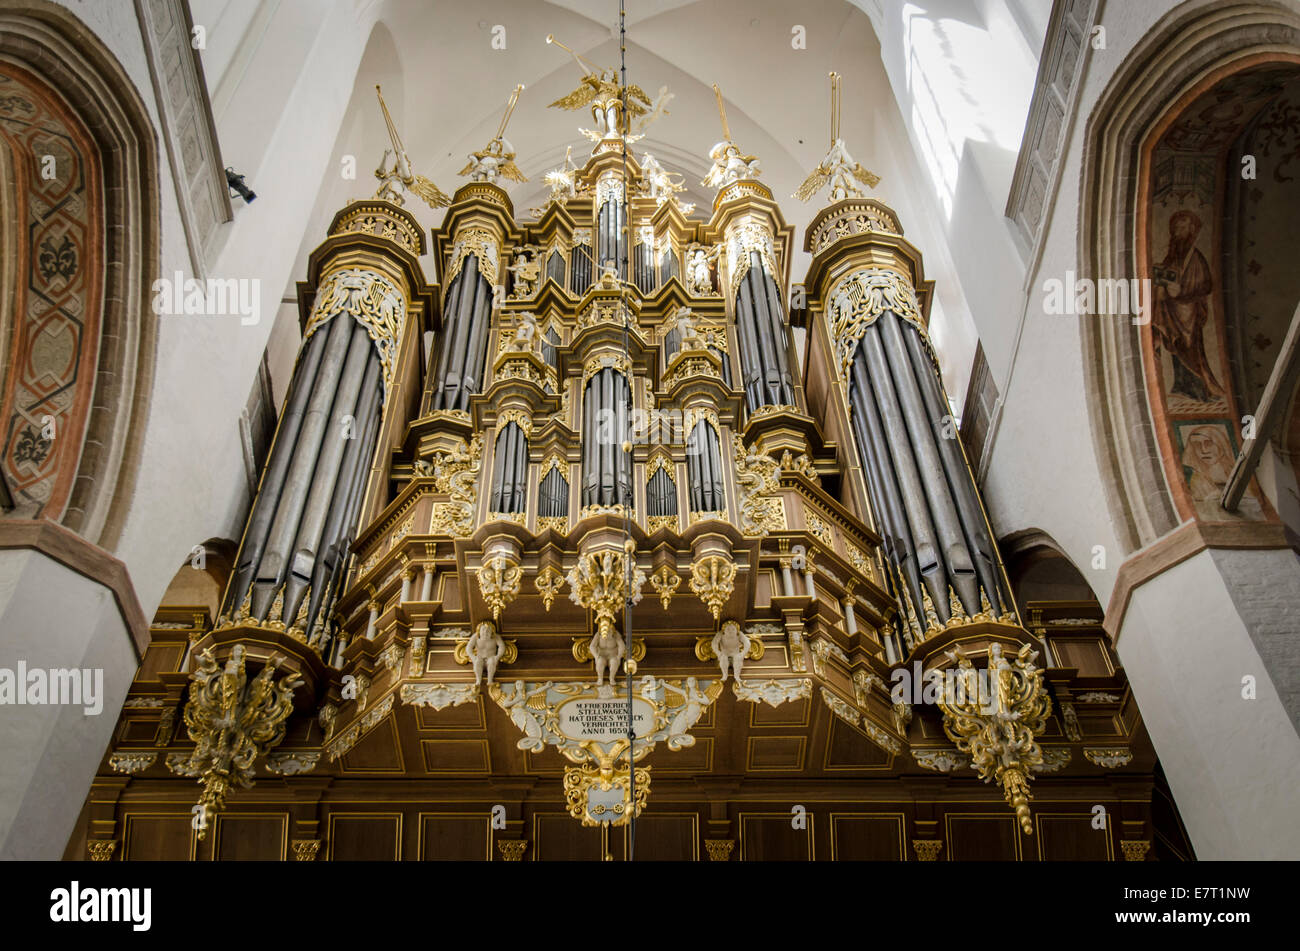 The Stellwagen organ of St Mary’s Church, Stralsund, Germany Stock Photo